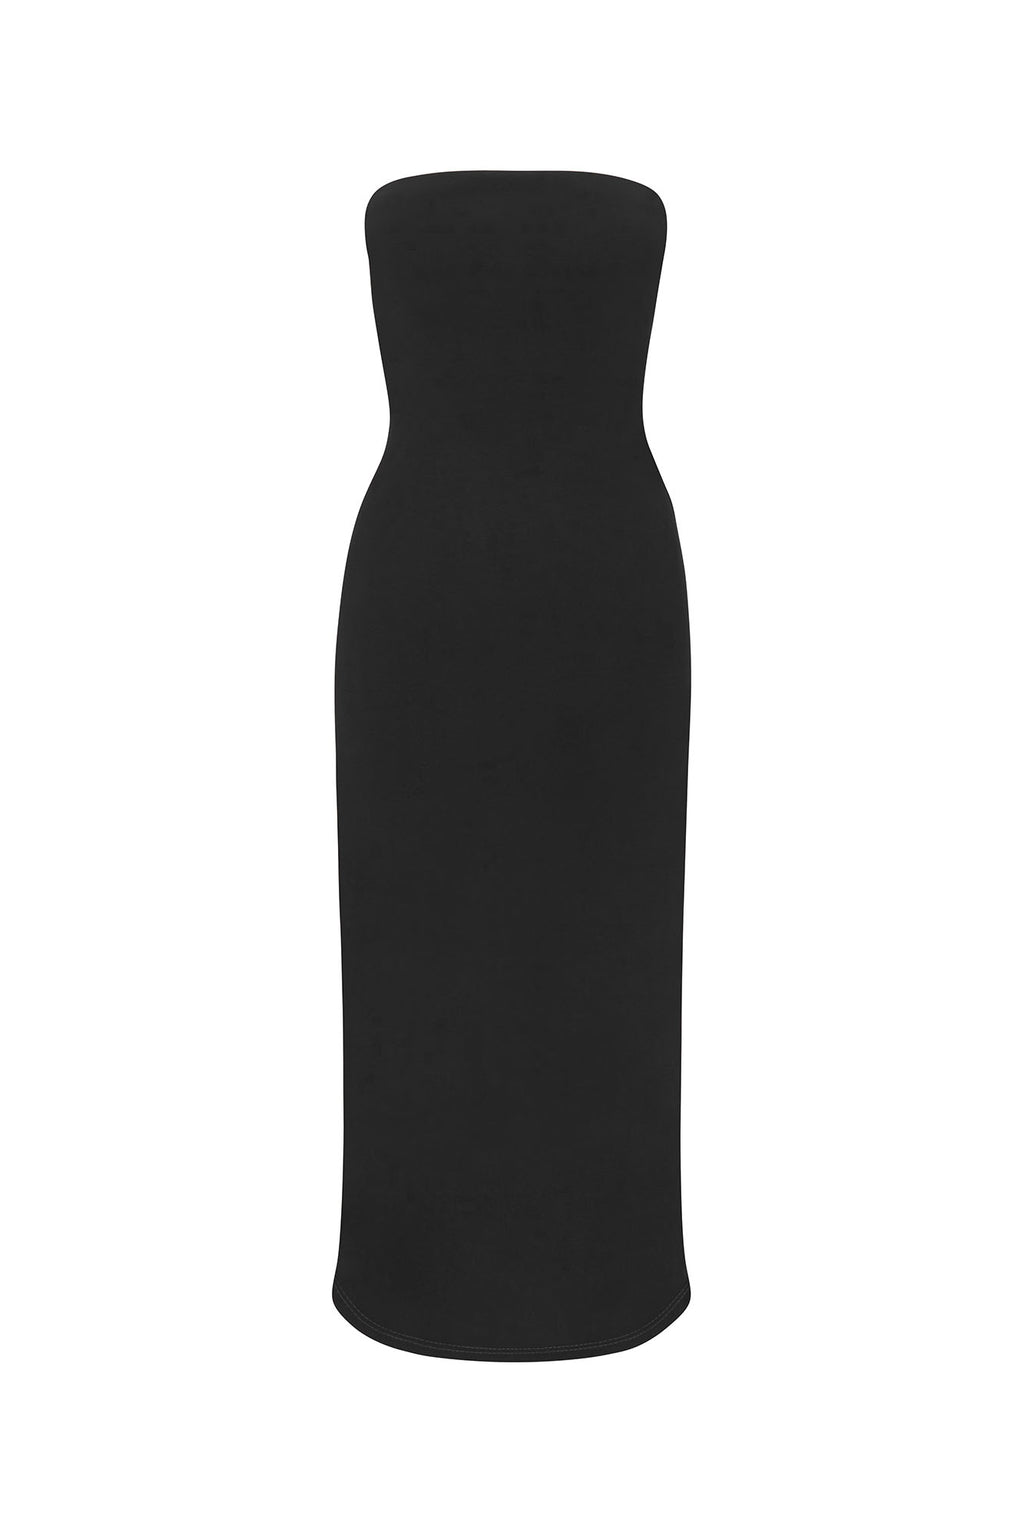 Lei Strapless Black Maxi Dress – Beginning Boutique US